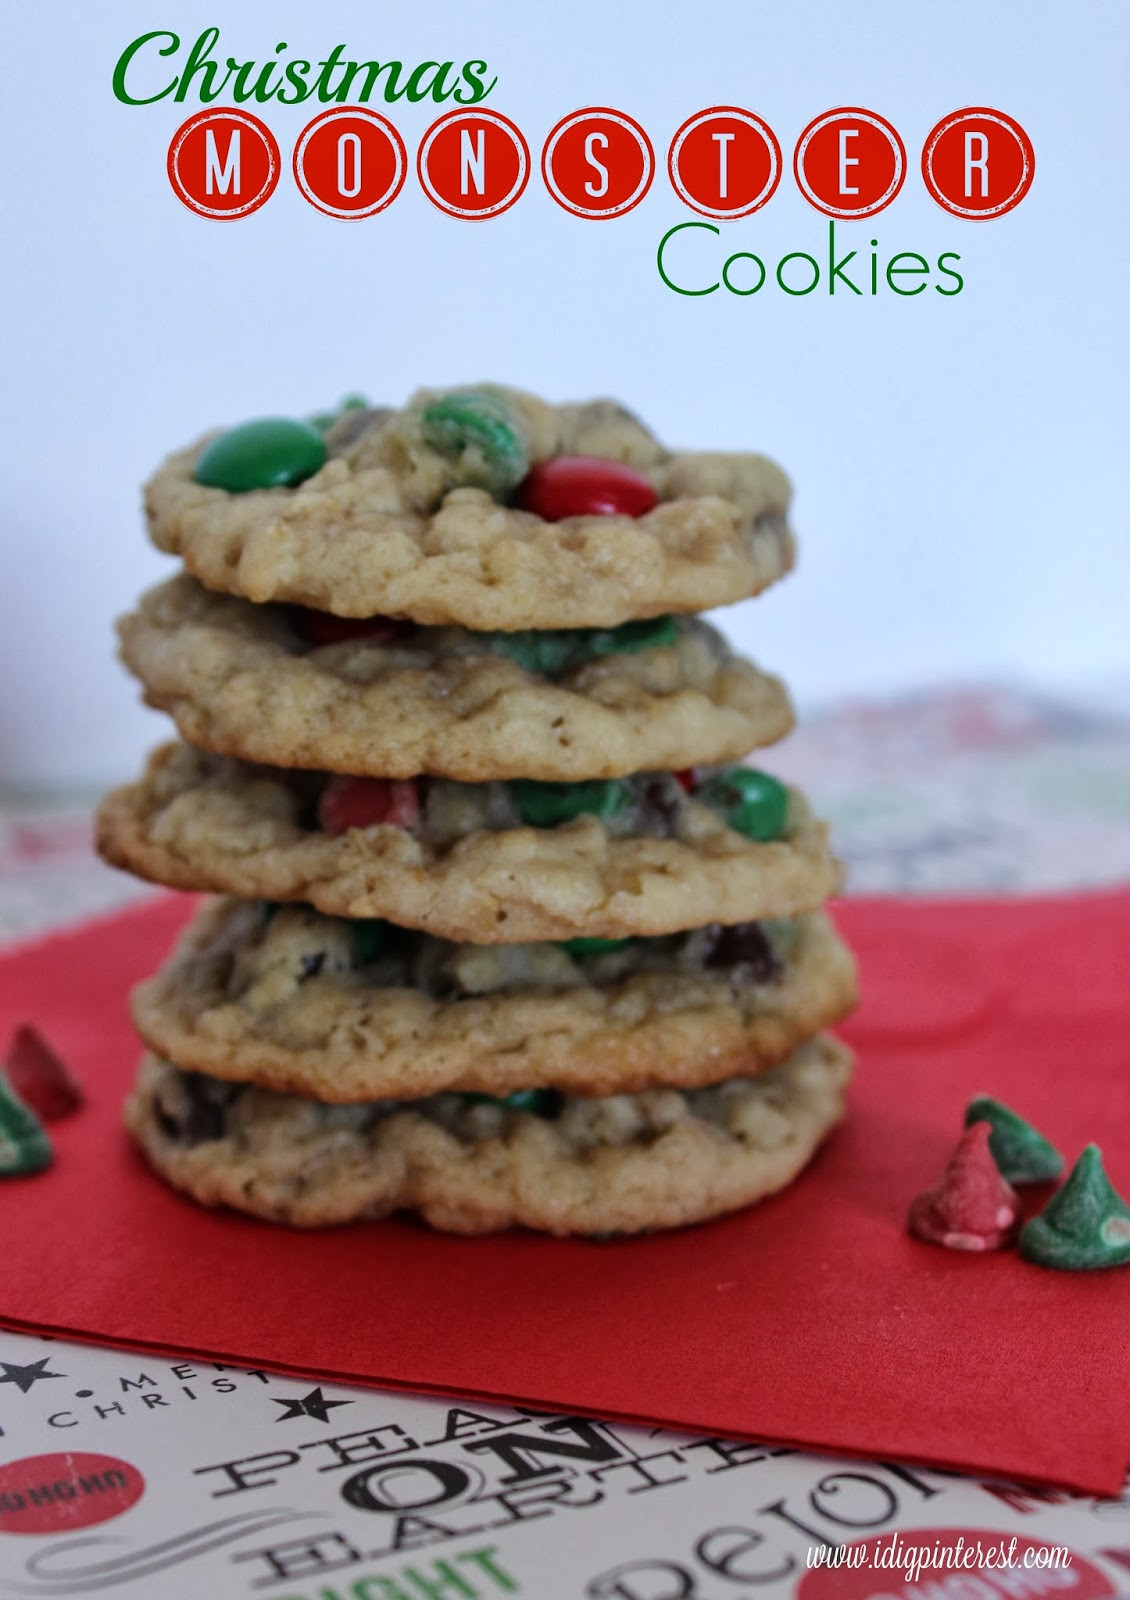 Christmas Monster Cookies
 I Dig Pinterest Christmas Monster Cookies